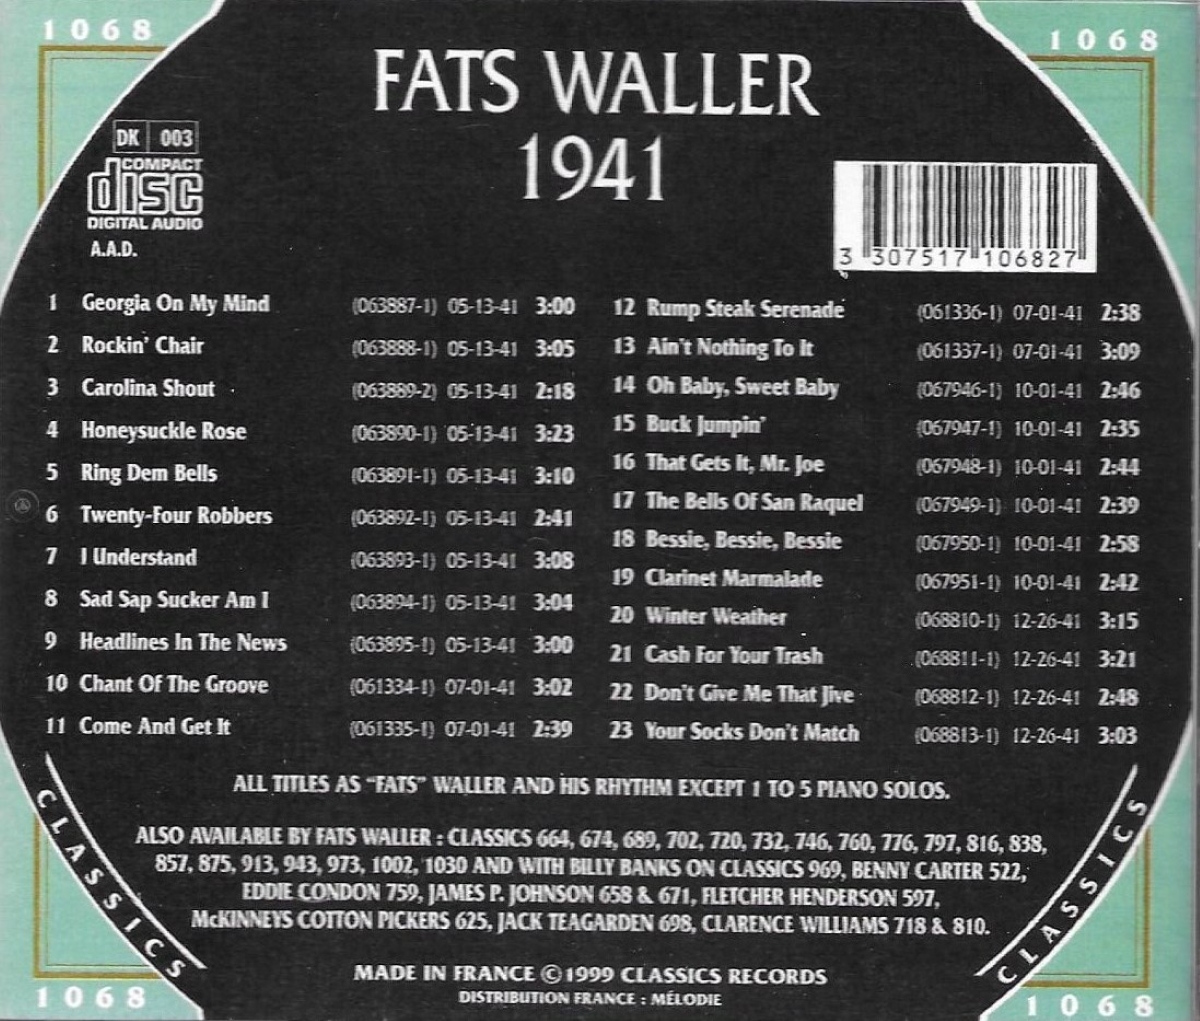 The Chronological Fats Waller-1941